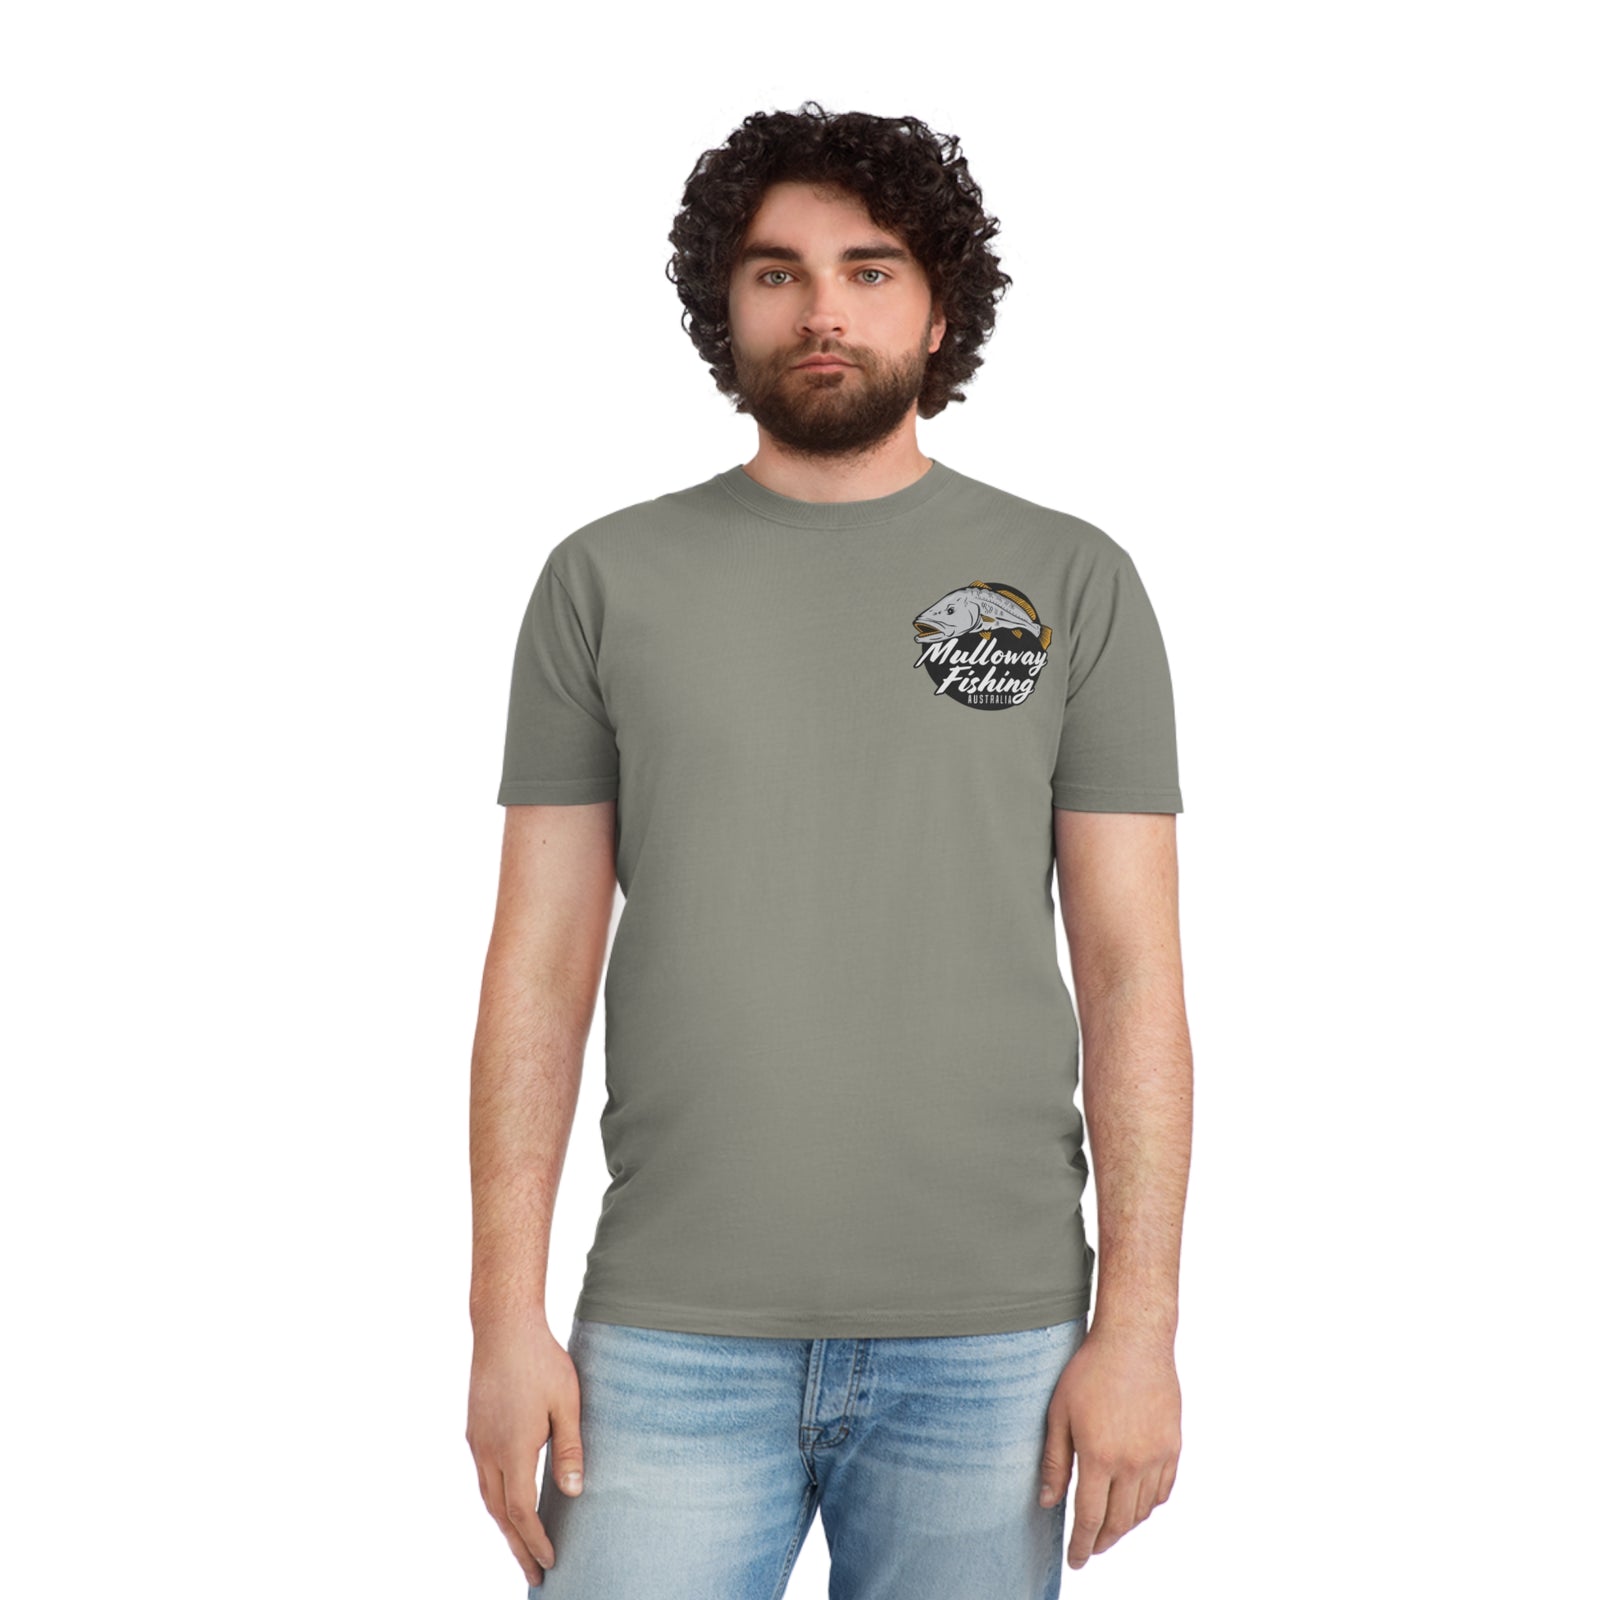 Unisex Faded Shirt New Style